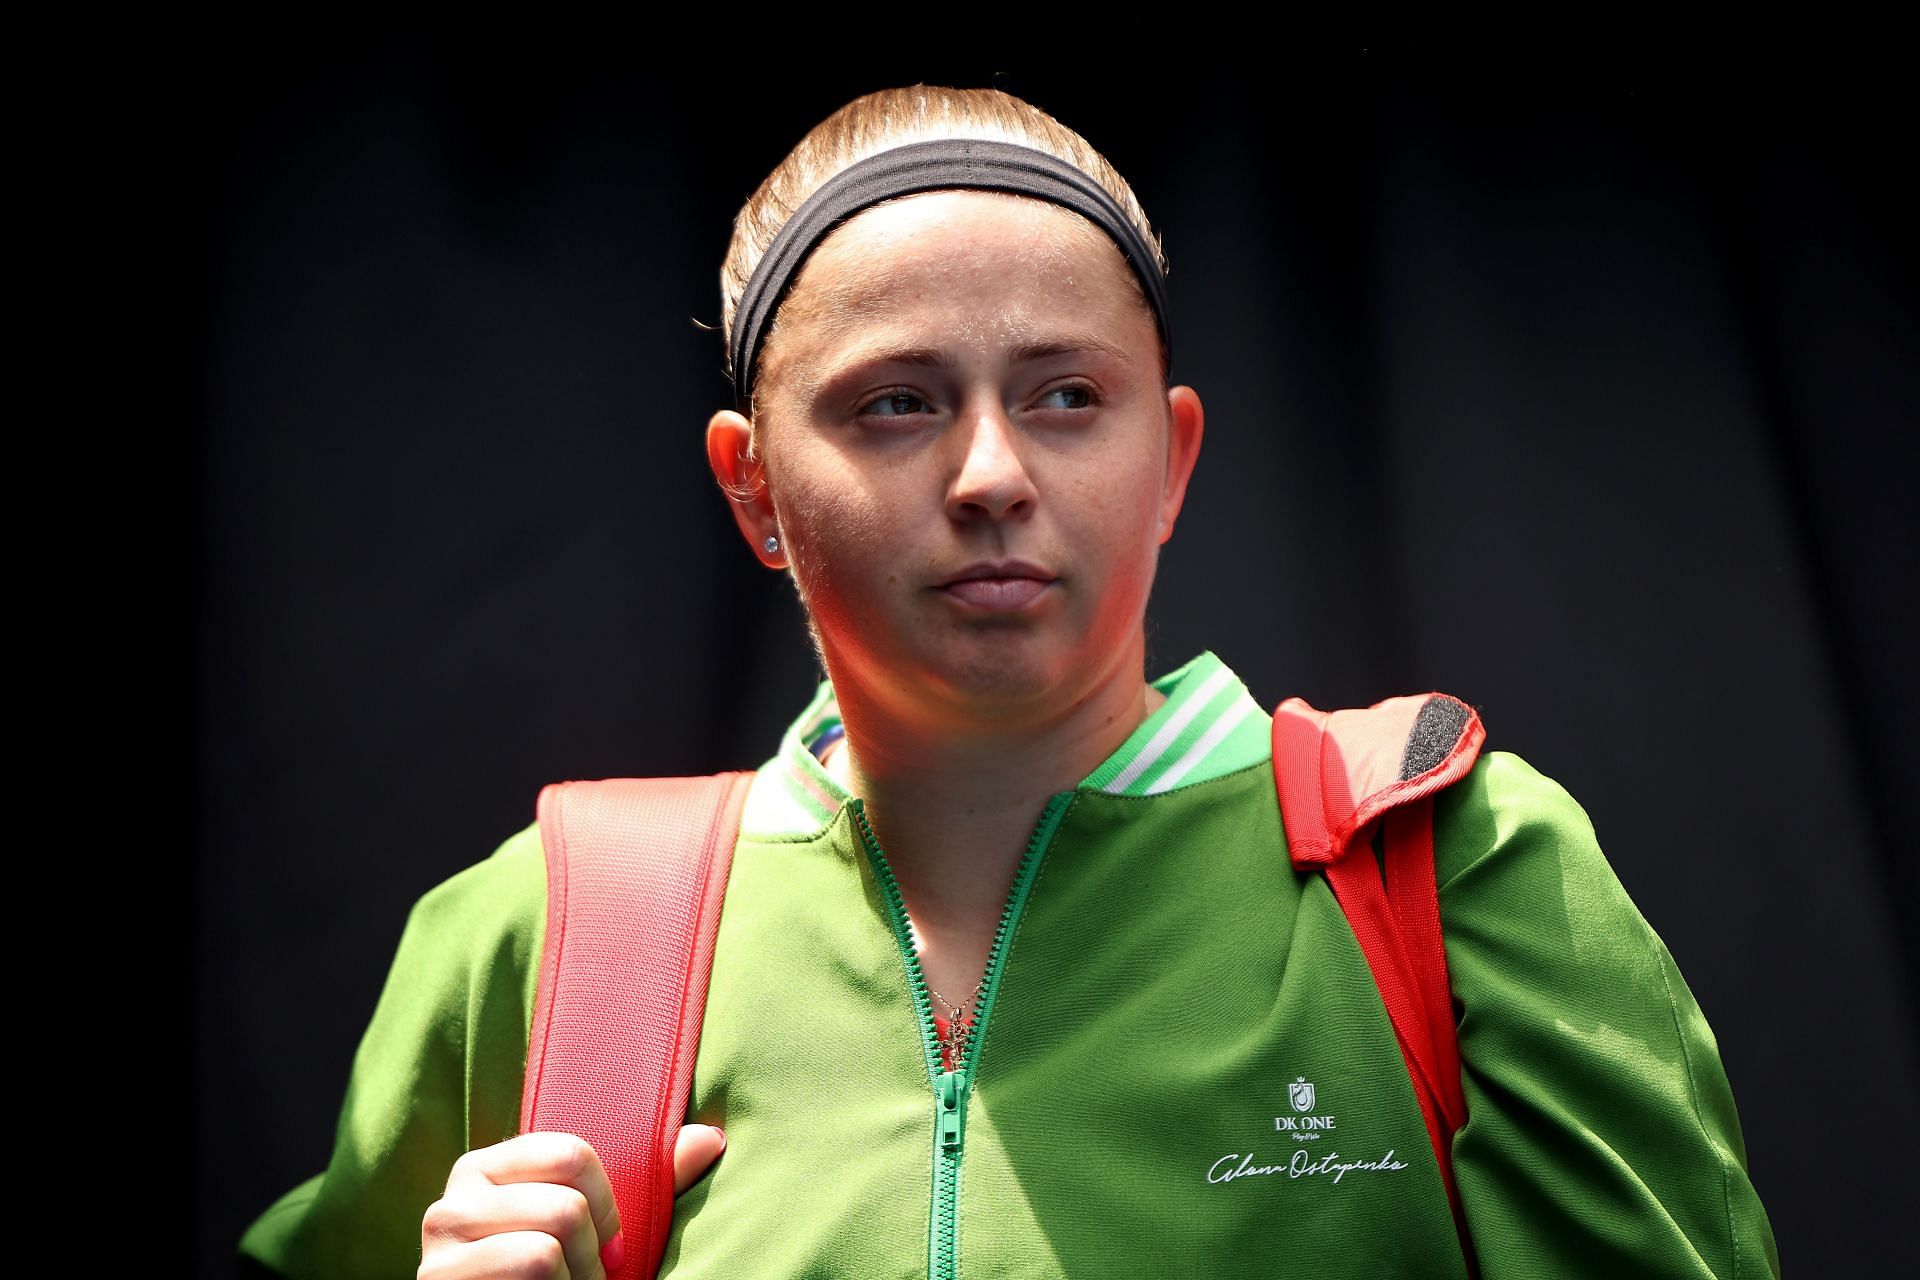 Jelena Ostapenko during the 2023 Australian Open contest against Coco Gauff.